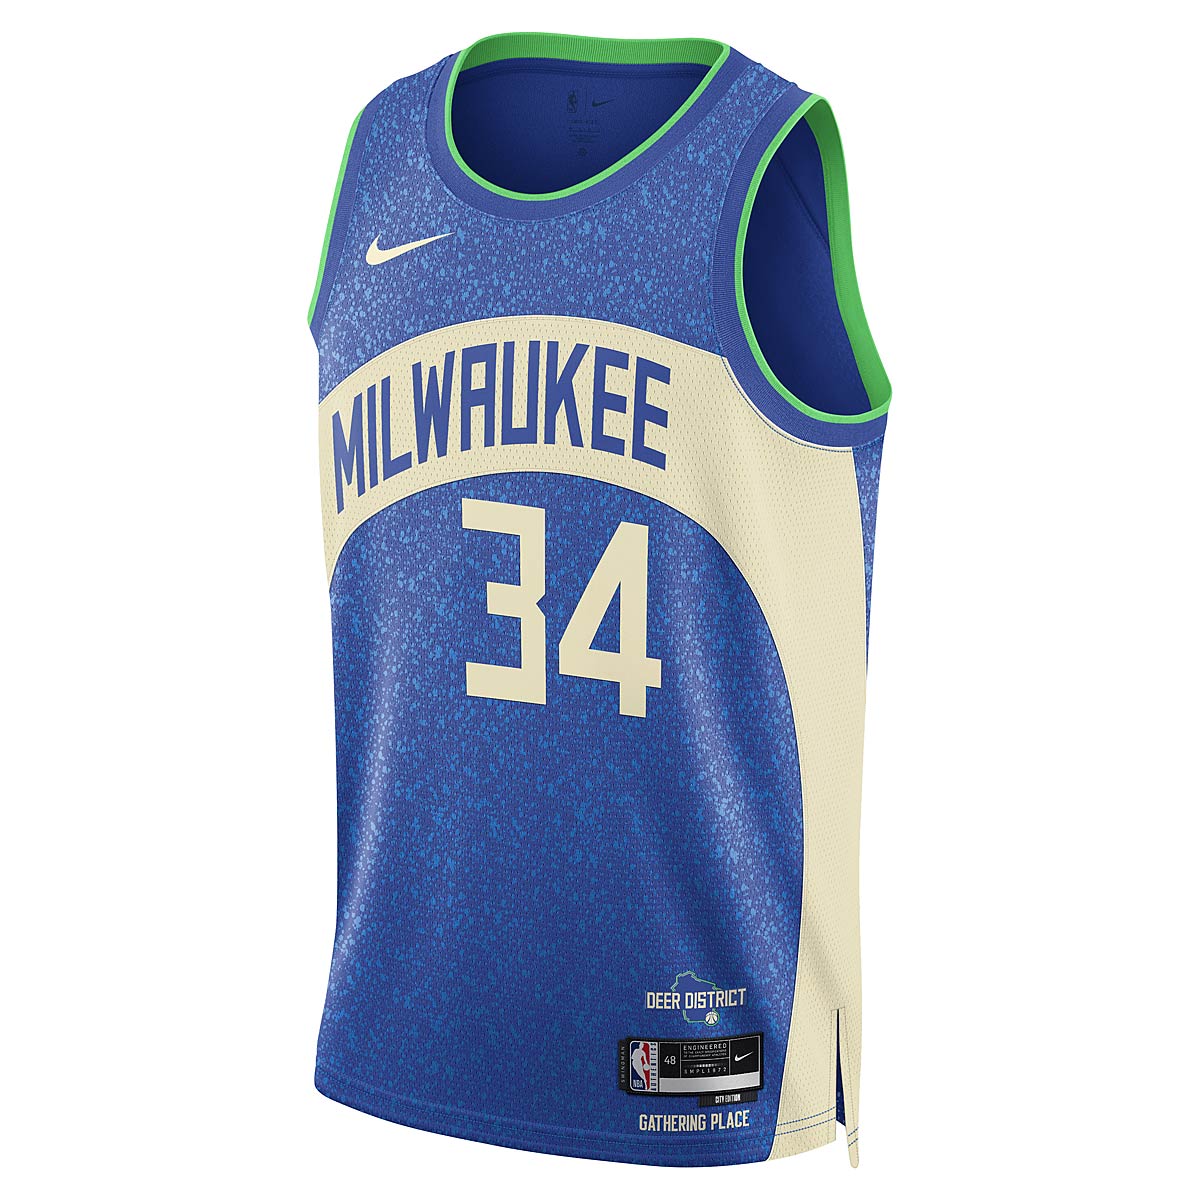 Nike NBA Milwaukee Bucks Dri-fit City Edition Swingman Jersey Giannis Antetokounmpo, Photo Blau/schwarz-weiß-university Rot M